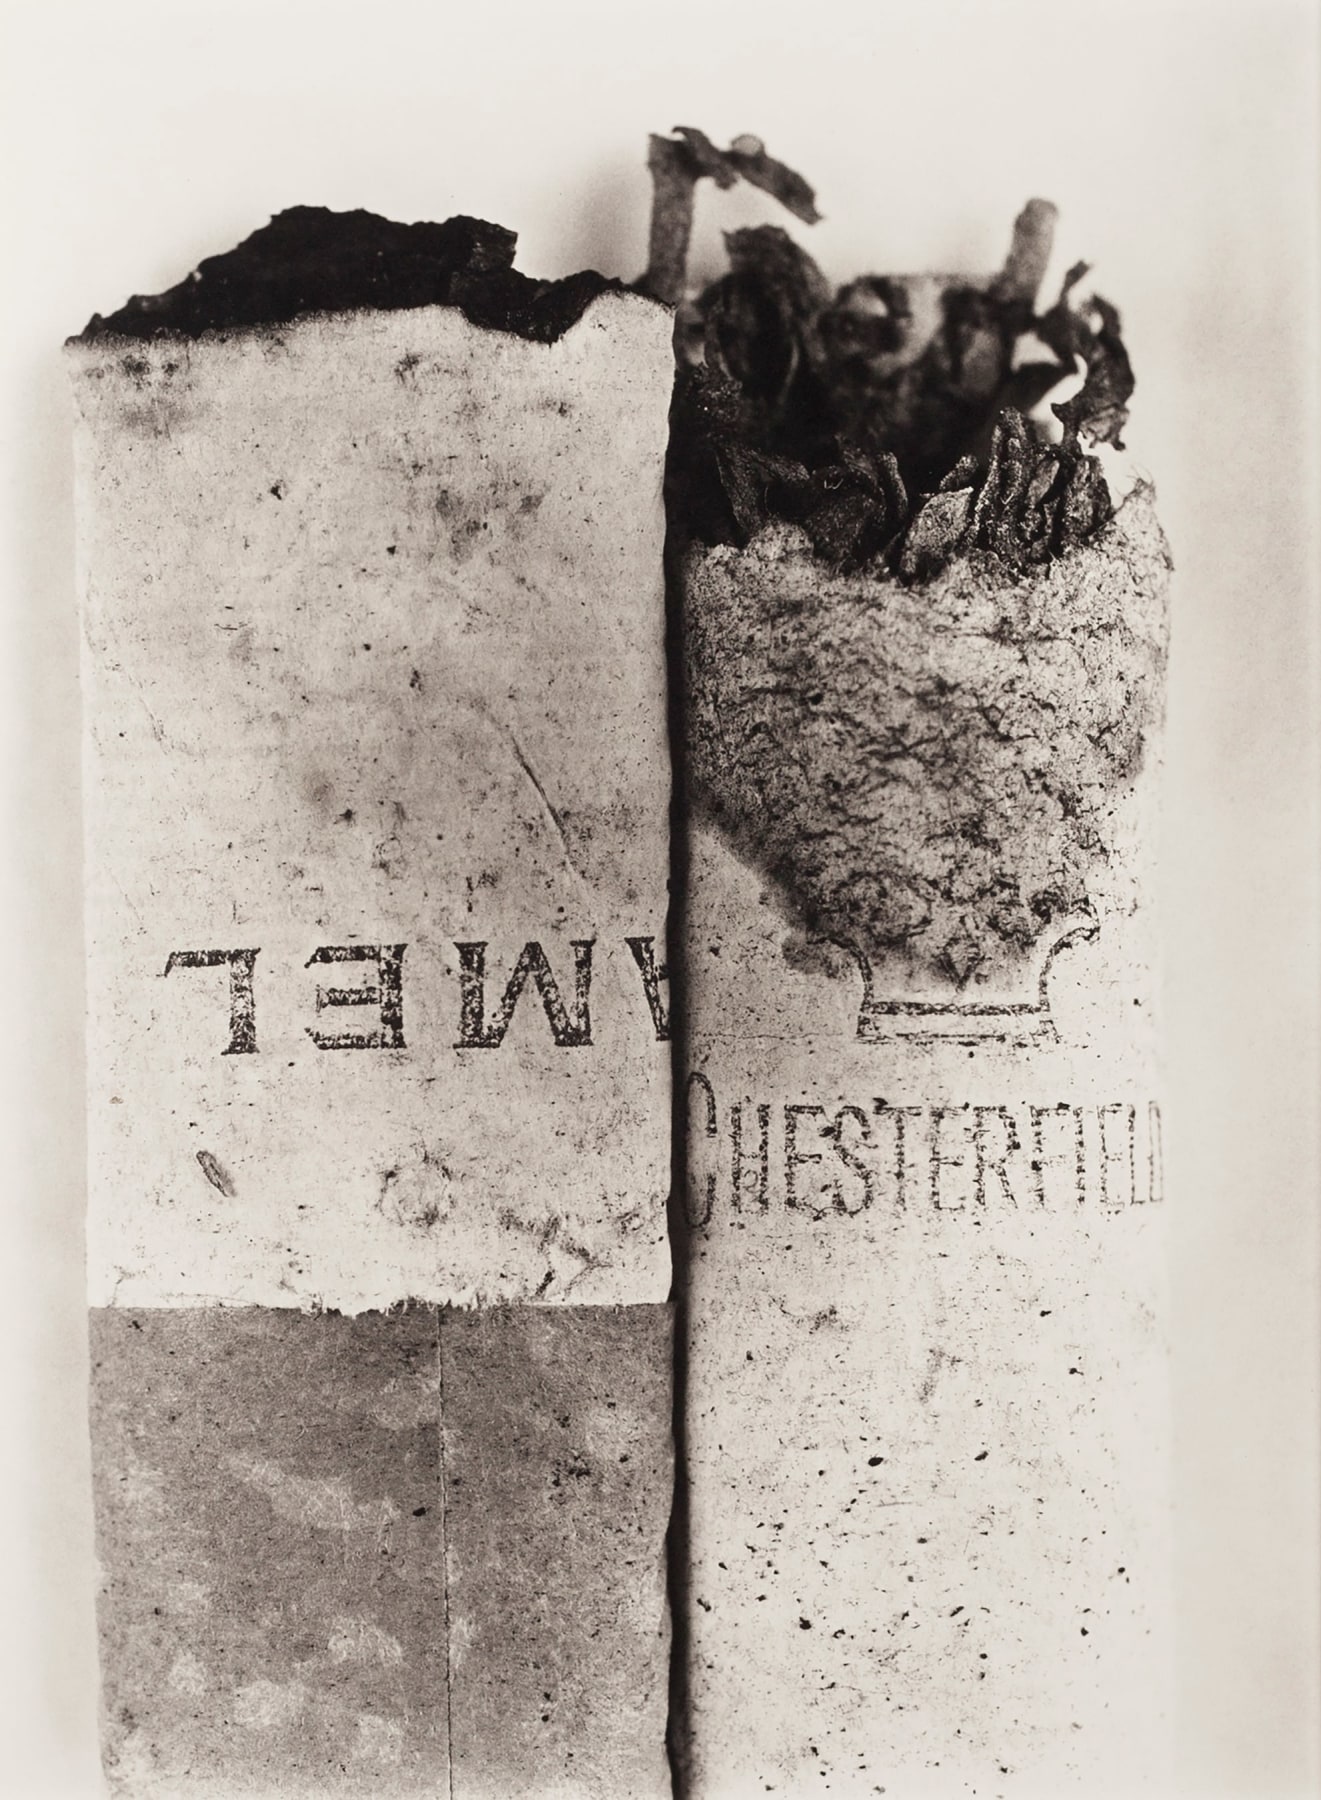 Irving Penn Cigarette No. 037, New York, 1972 / printed 1974